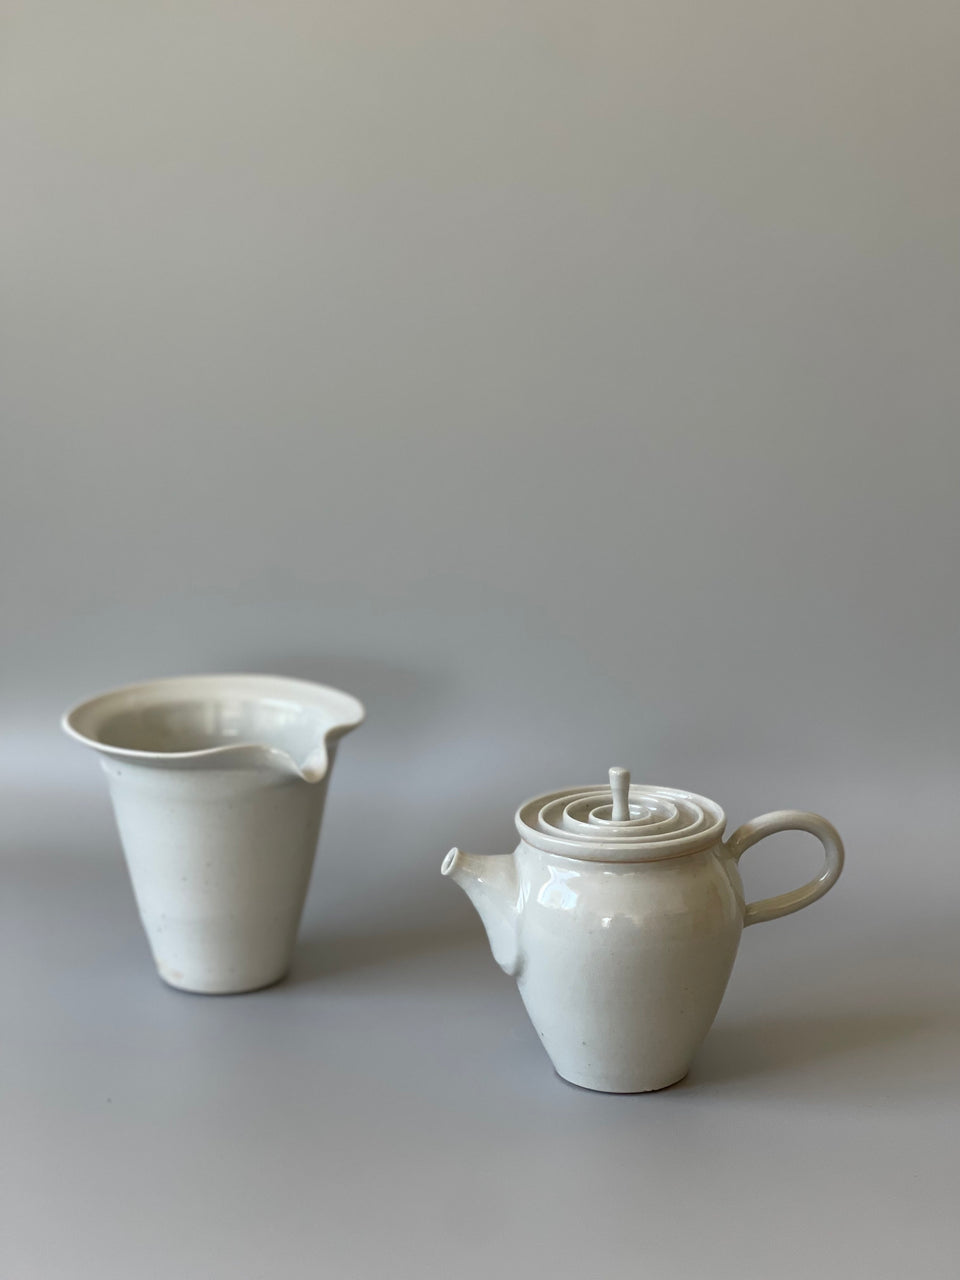 Yu-Jui Yang ceramic teaware, blending minimalism and innovation for an elegant tea experience.